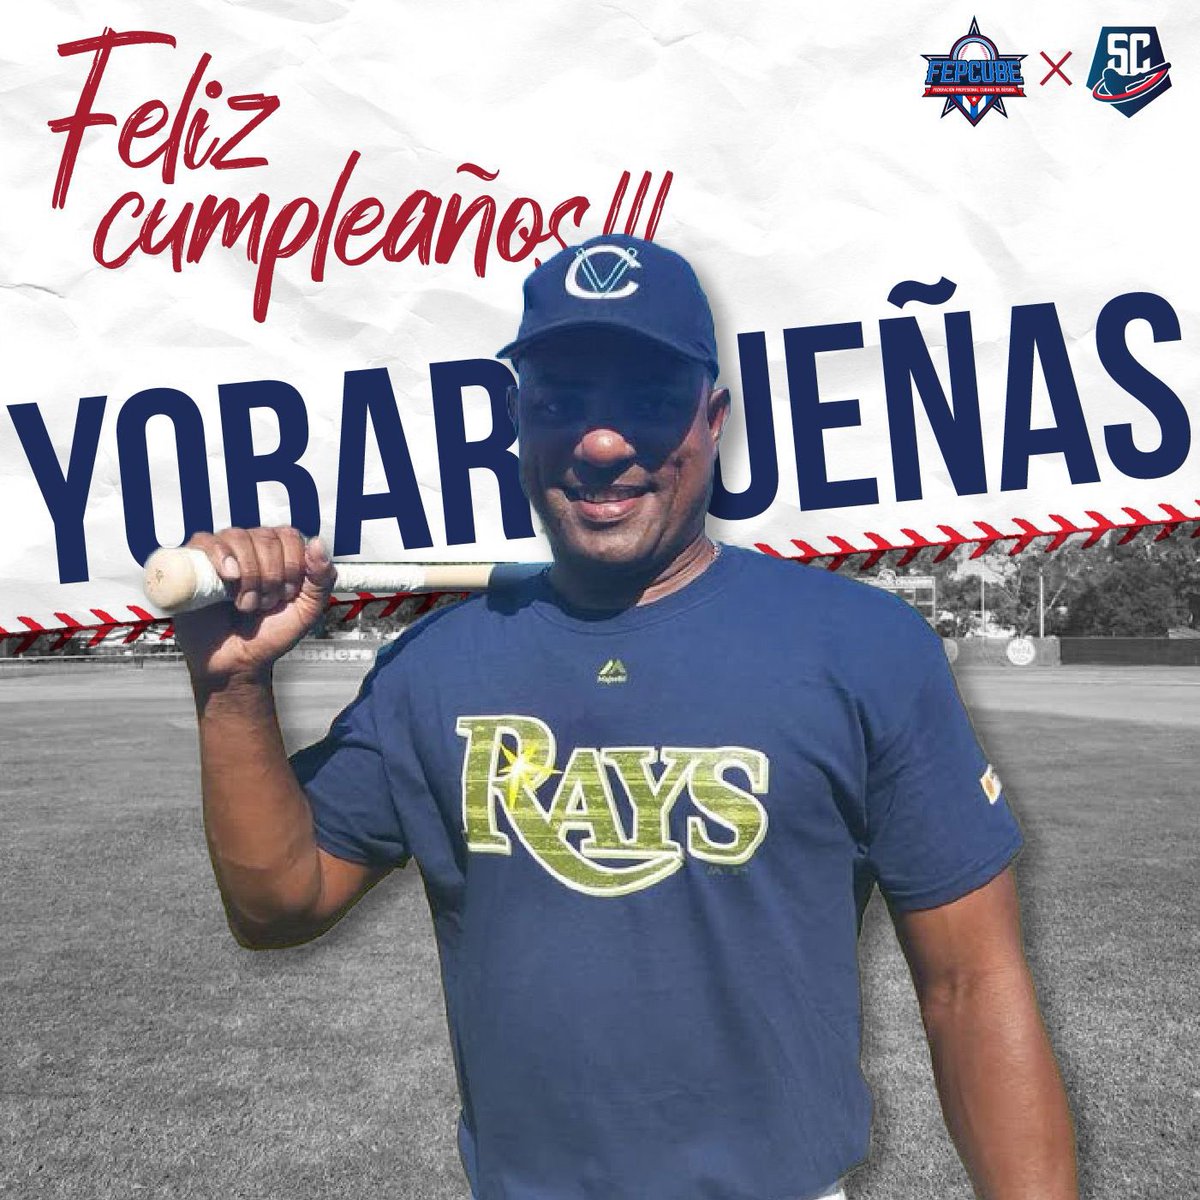 Hoy está de cumpleaños Yobar Dueñas, gran expelotero y un verdadero hombre de béisbol. ¡Felicidades caballo! 💪🔥🇨🇺

#HappyBirthday #OneTeamOneDream
#OrgulloCubano